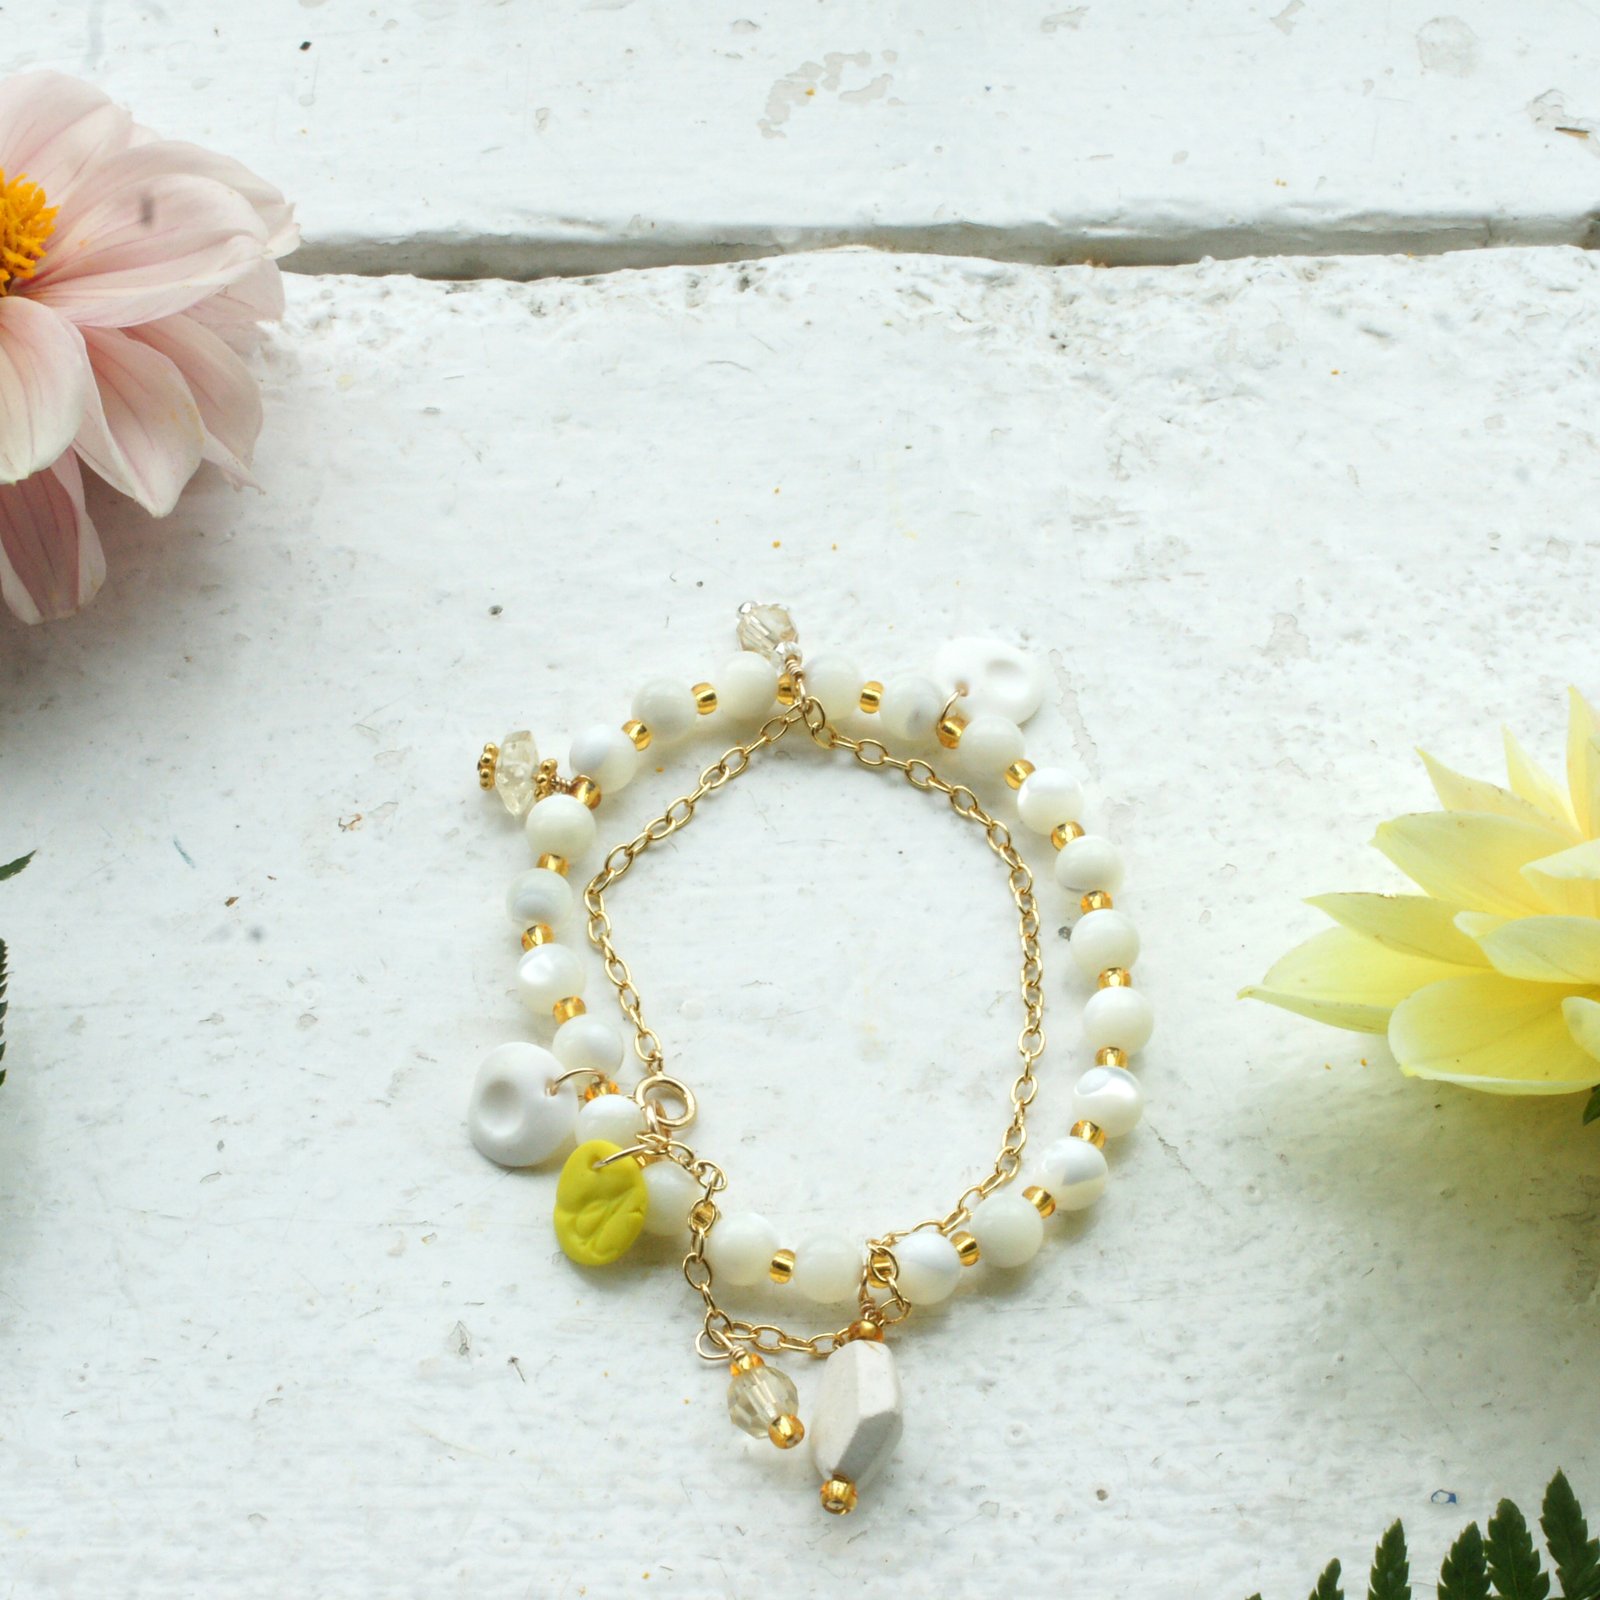 73 Amma bangle ideas | bridal gold jewellery, gold necklace designs, gold  jewelry fashion